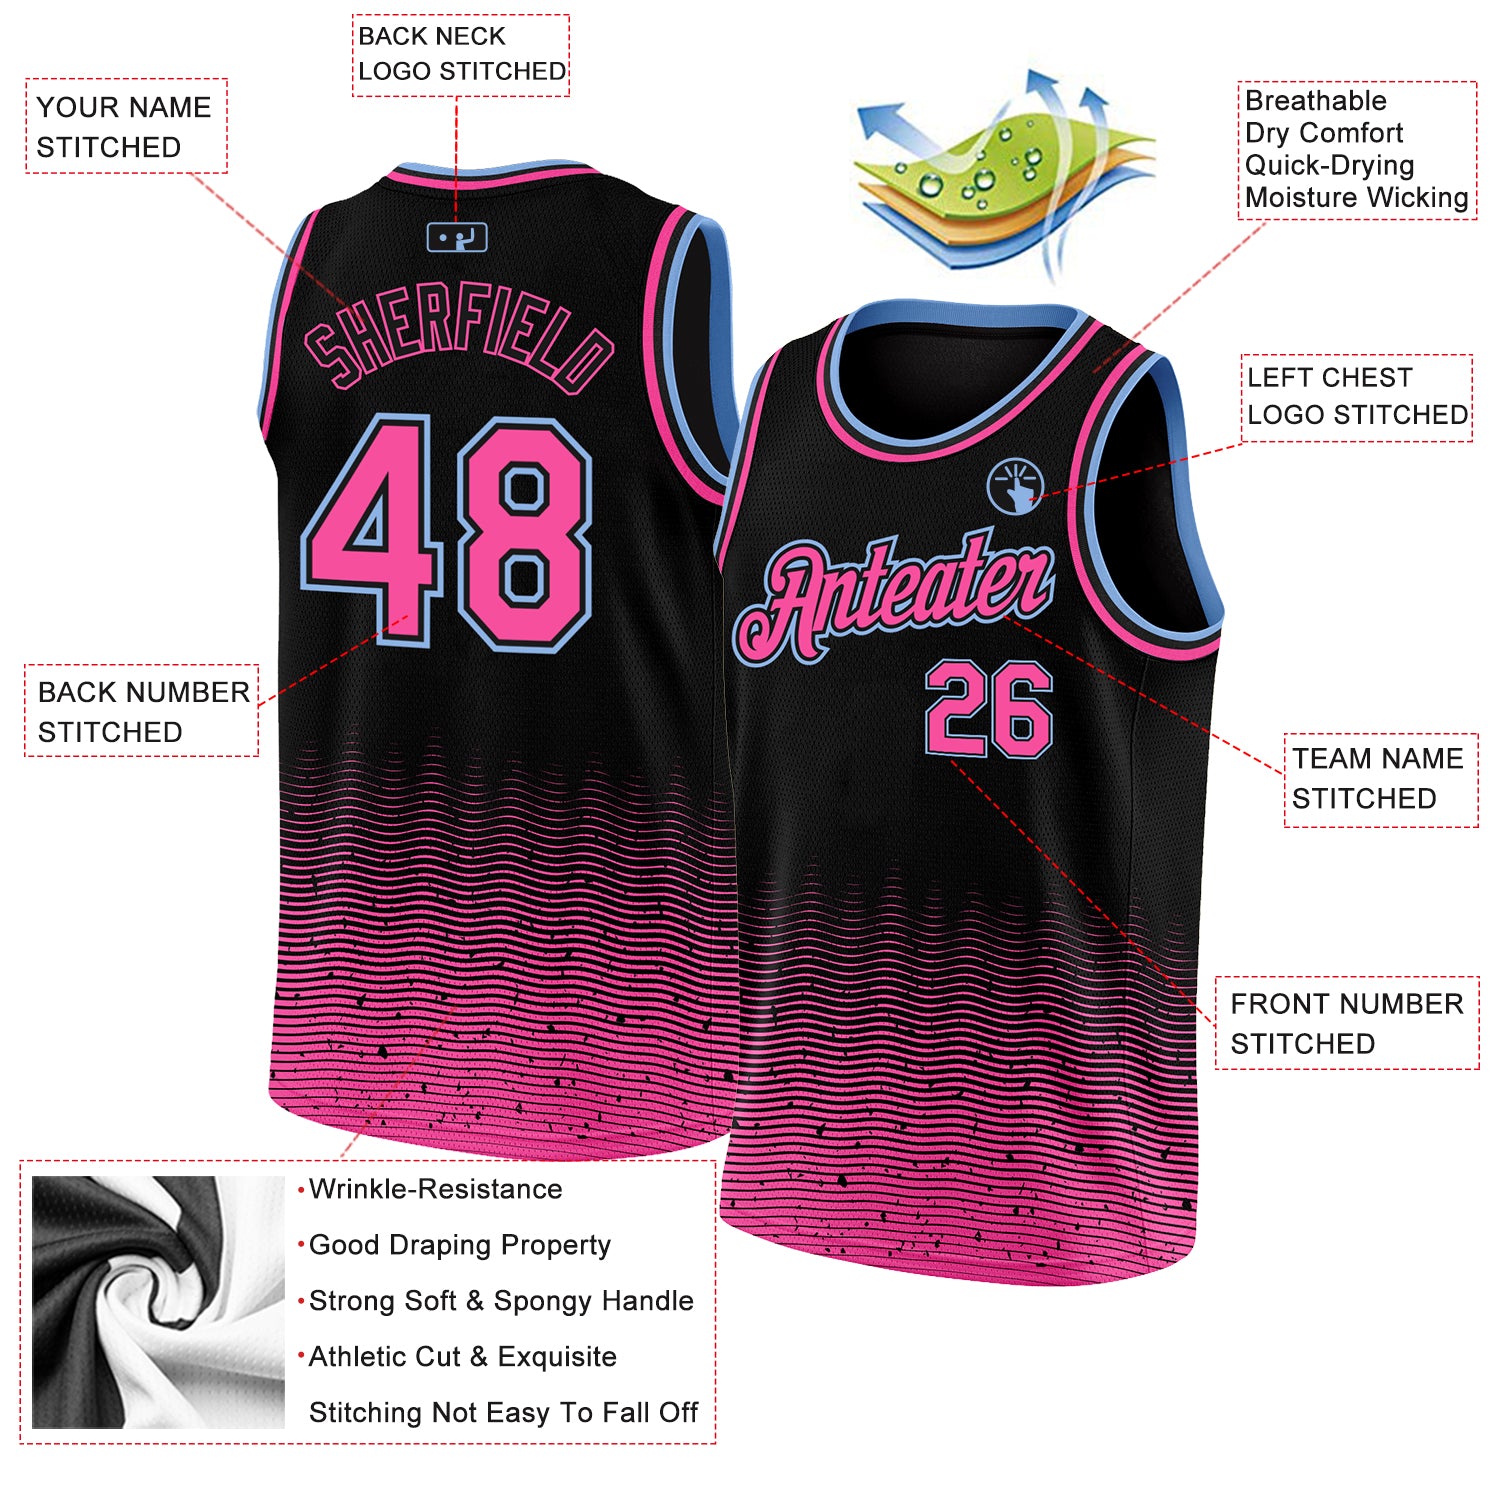 FANSIDEA Custom Basketball Jersey White Pink Black-Light Blue Authentic Throwback Men's Size:XL